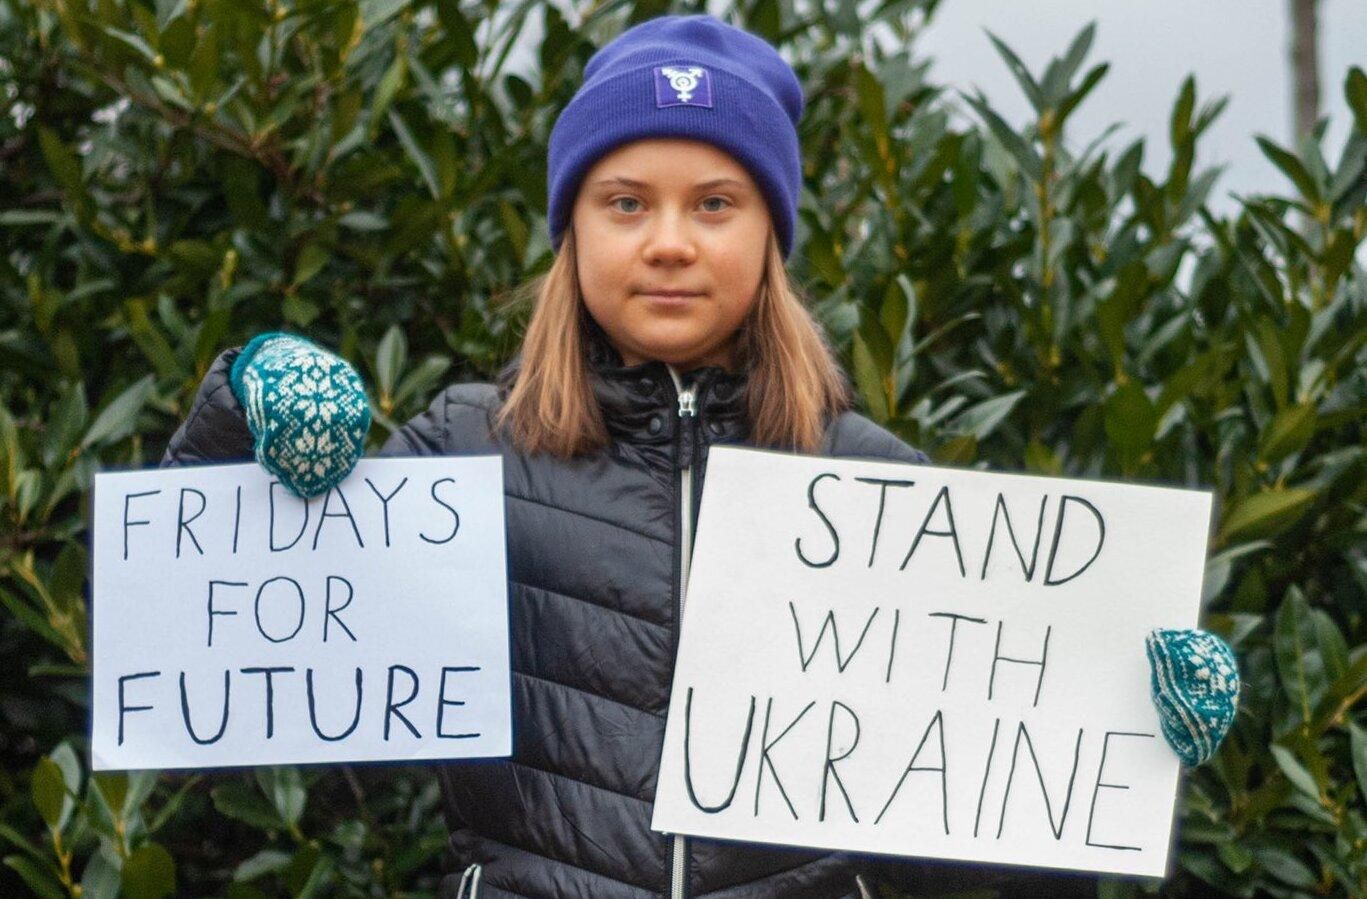 "Stand with Ukraine": Грета Тунберг поддержала Украину - 24 Канал